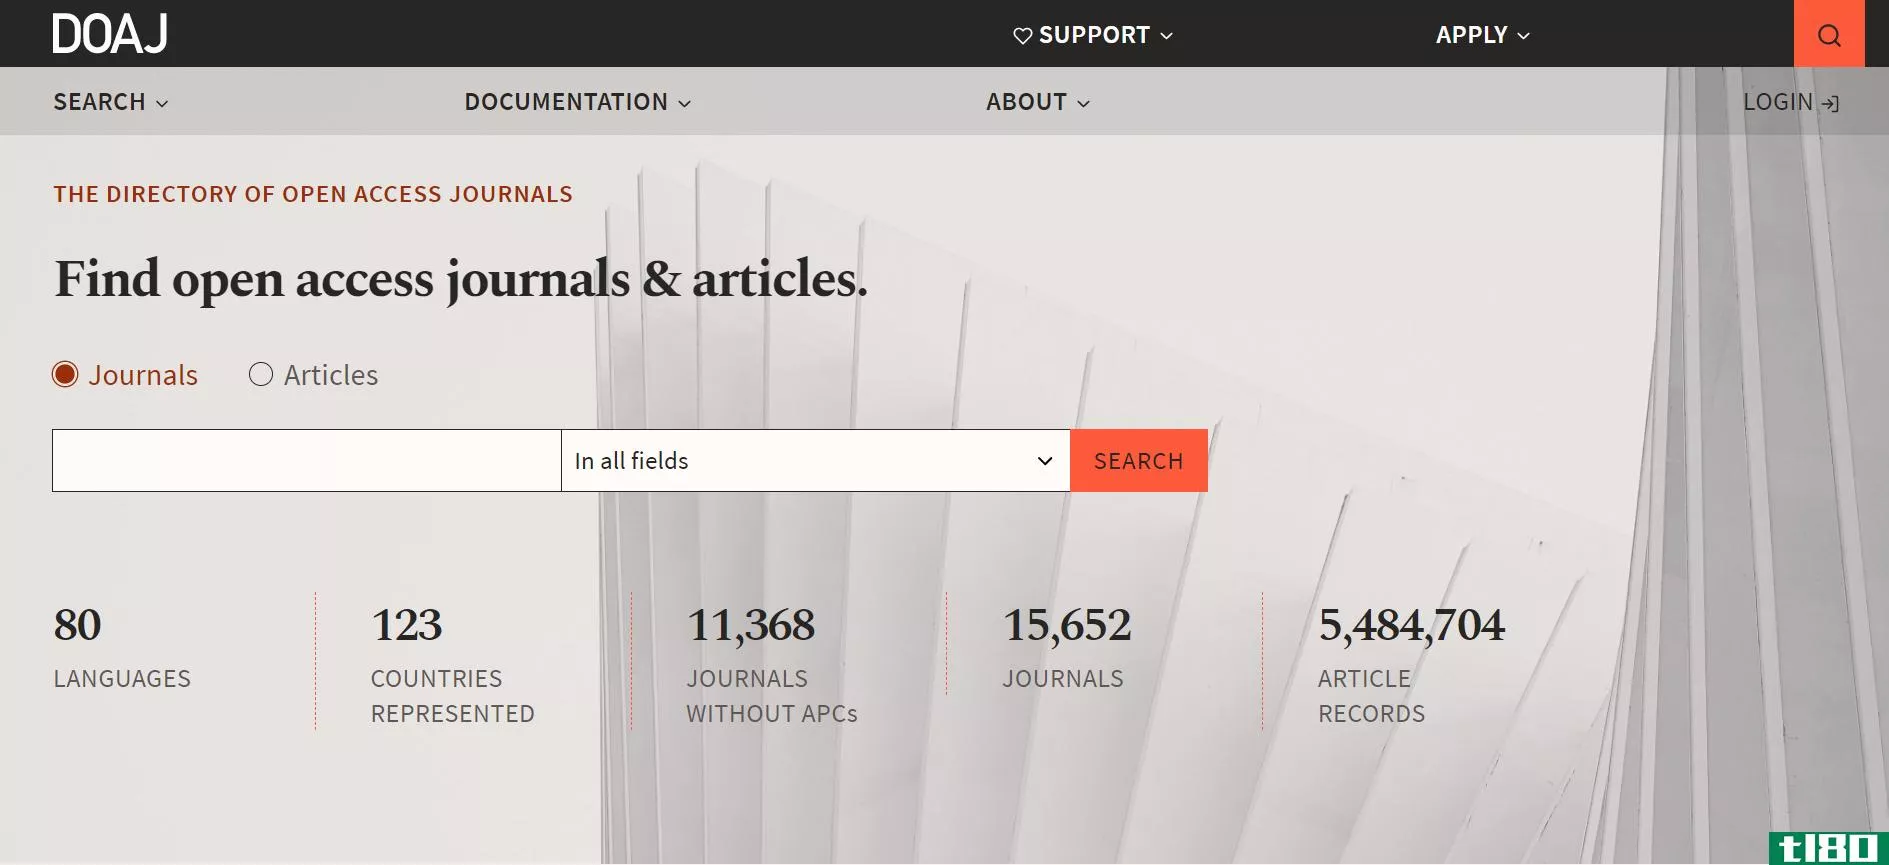 DOAJ open access journals homepage